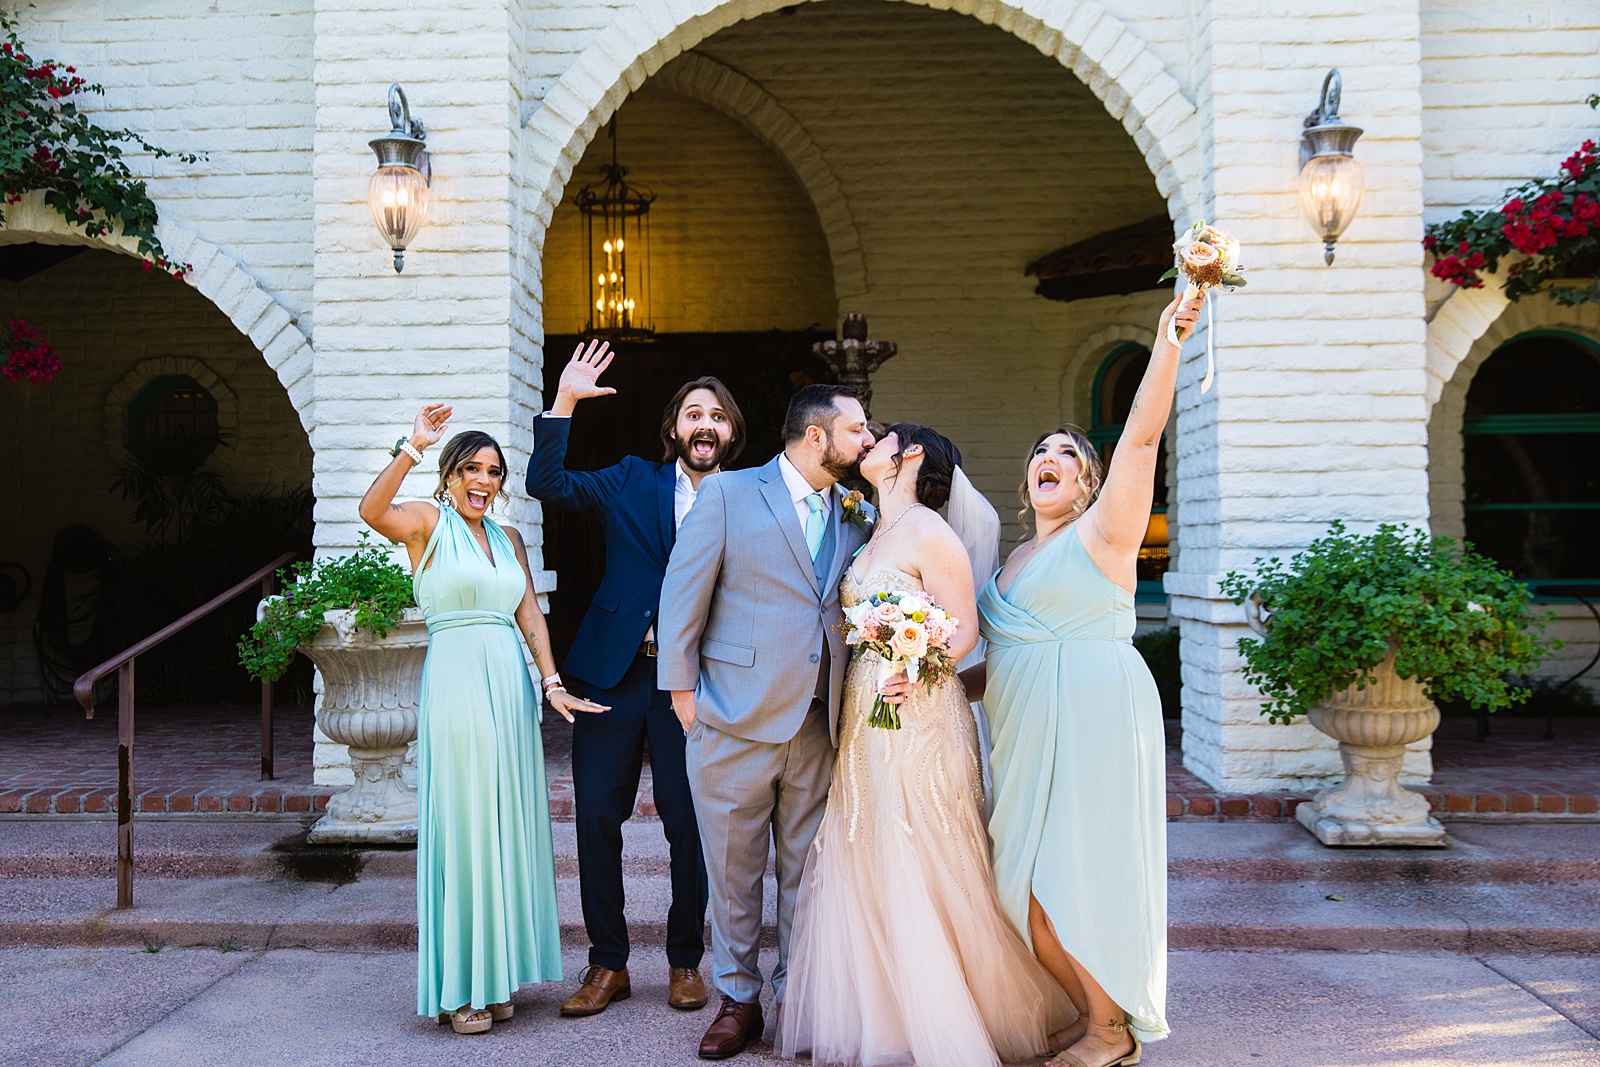 Bridal party having fun together at Bella Rose Estate weding by Arizona wedding photographer PMA Photography.